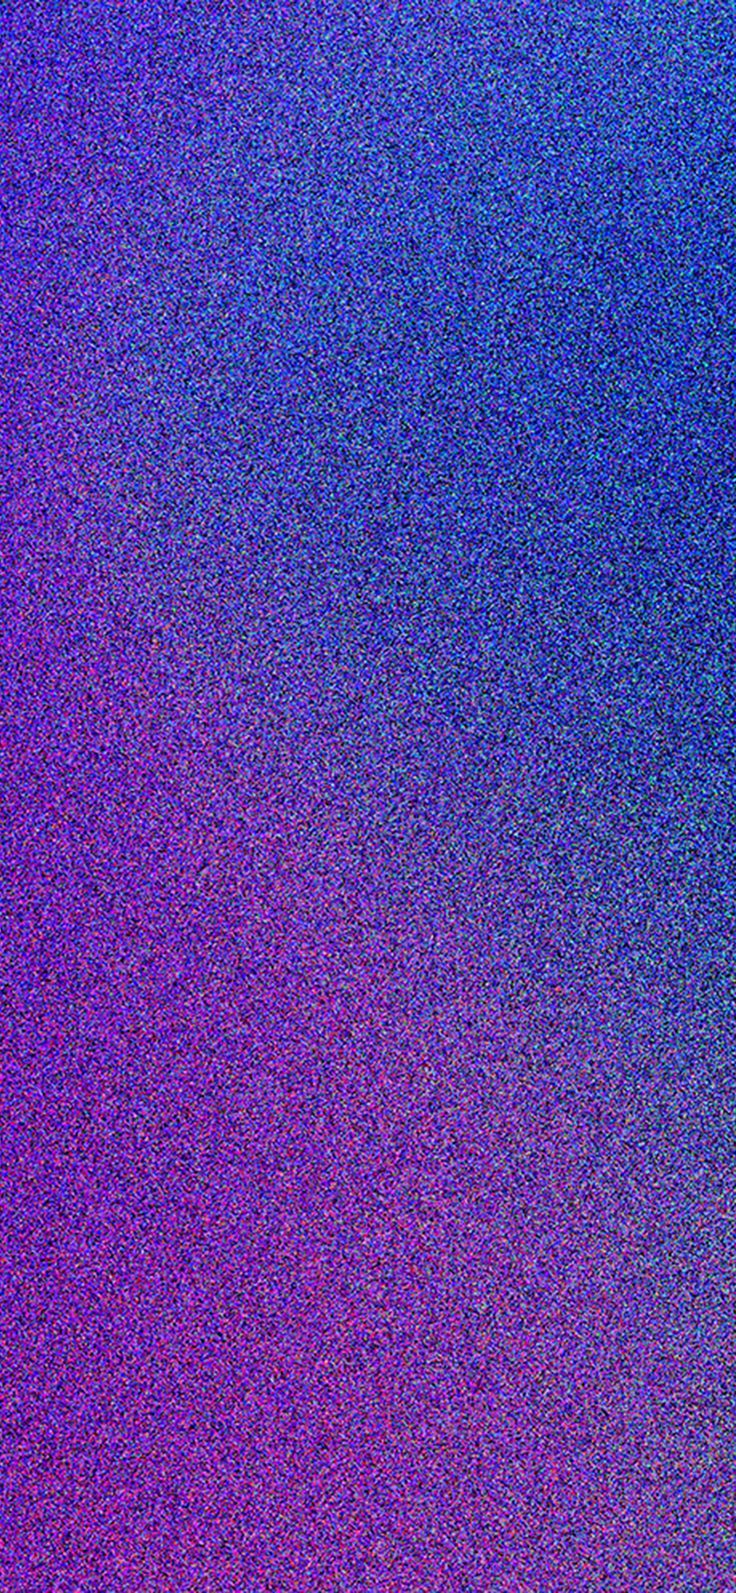 iPhone X wallpaper, dots blue purple pattern background